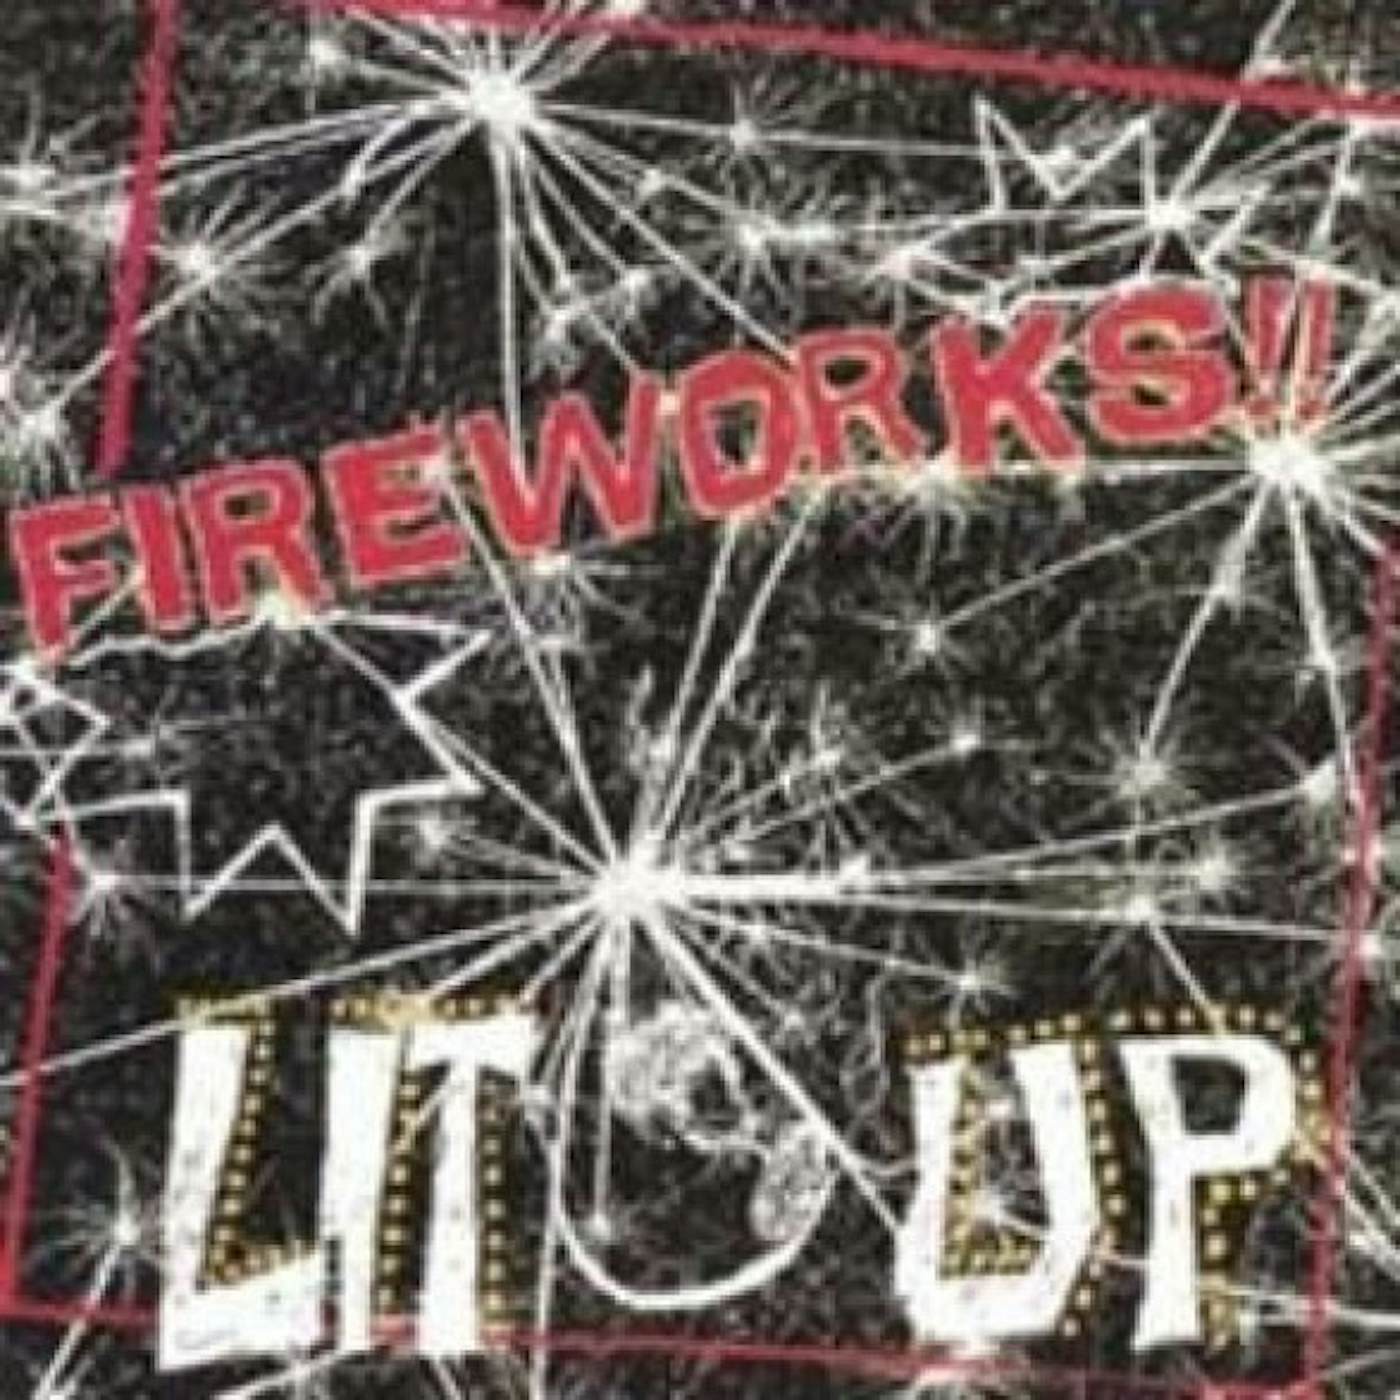 Fireworks Lit Up Vinyl Record